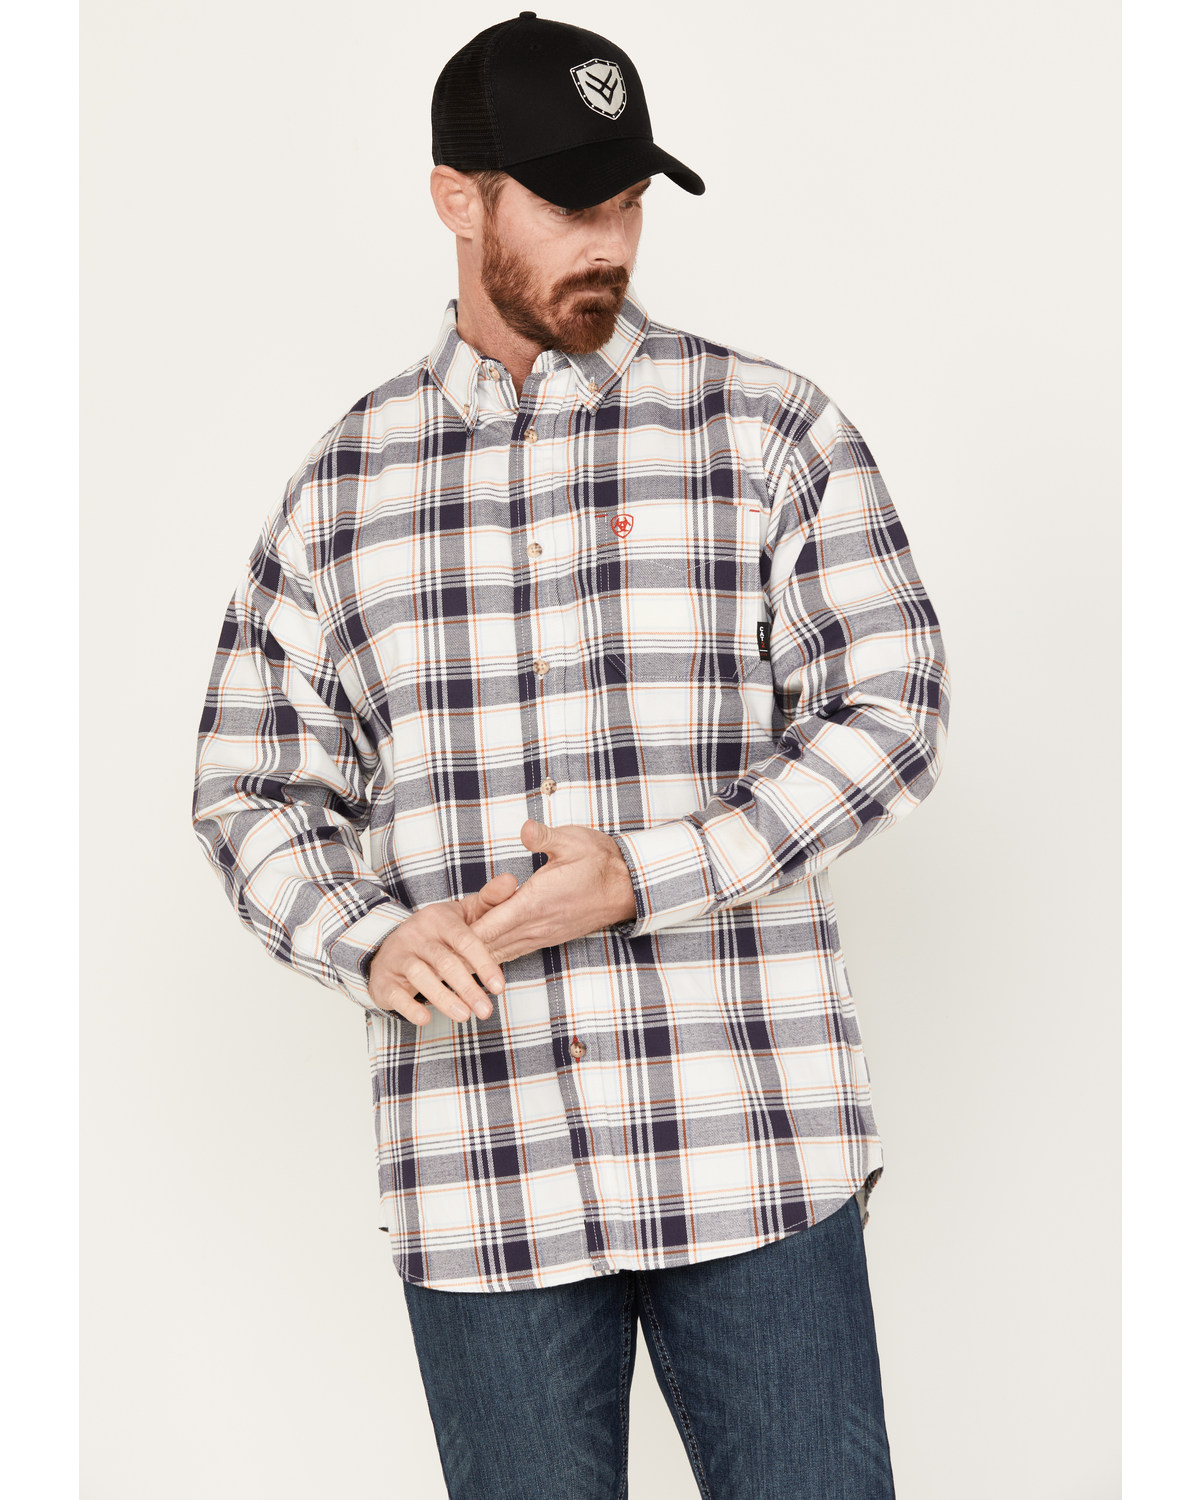 Ariat Men's FR Chiseled Plaid Print Long Sleeve Button Down Work Shirt